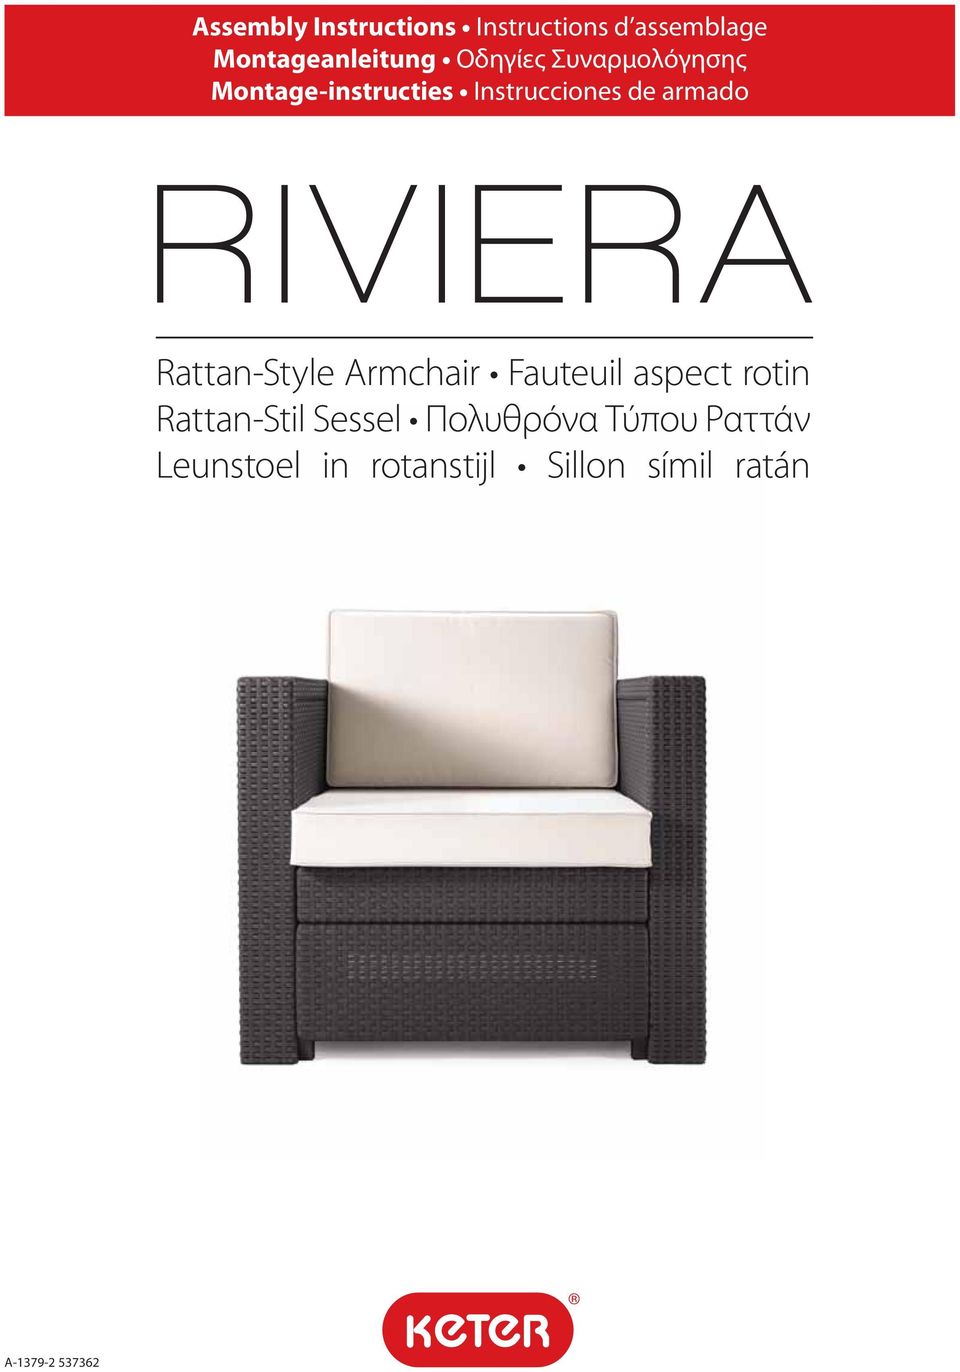 RIVIERA Rattan-Style Armchair Fauteuil aspect rotin Rattan-Stil Sessel